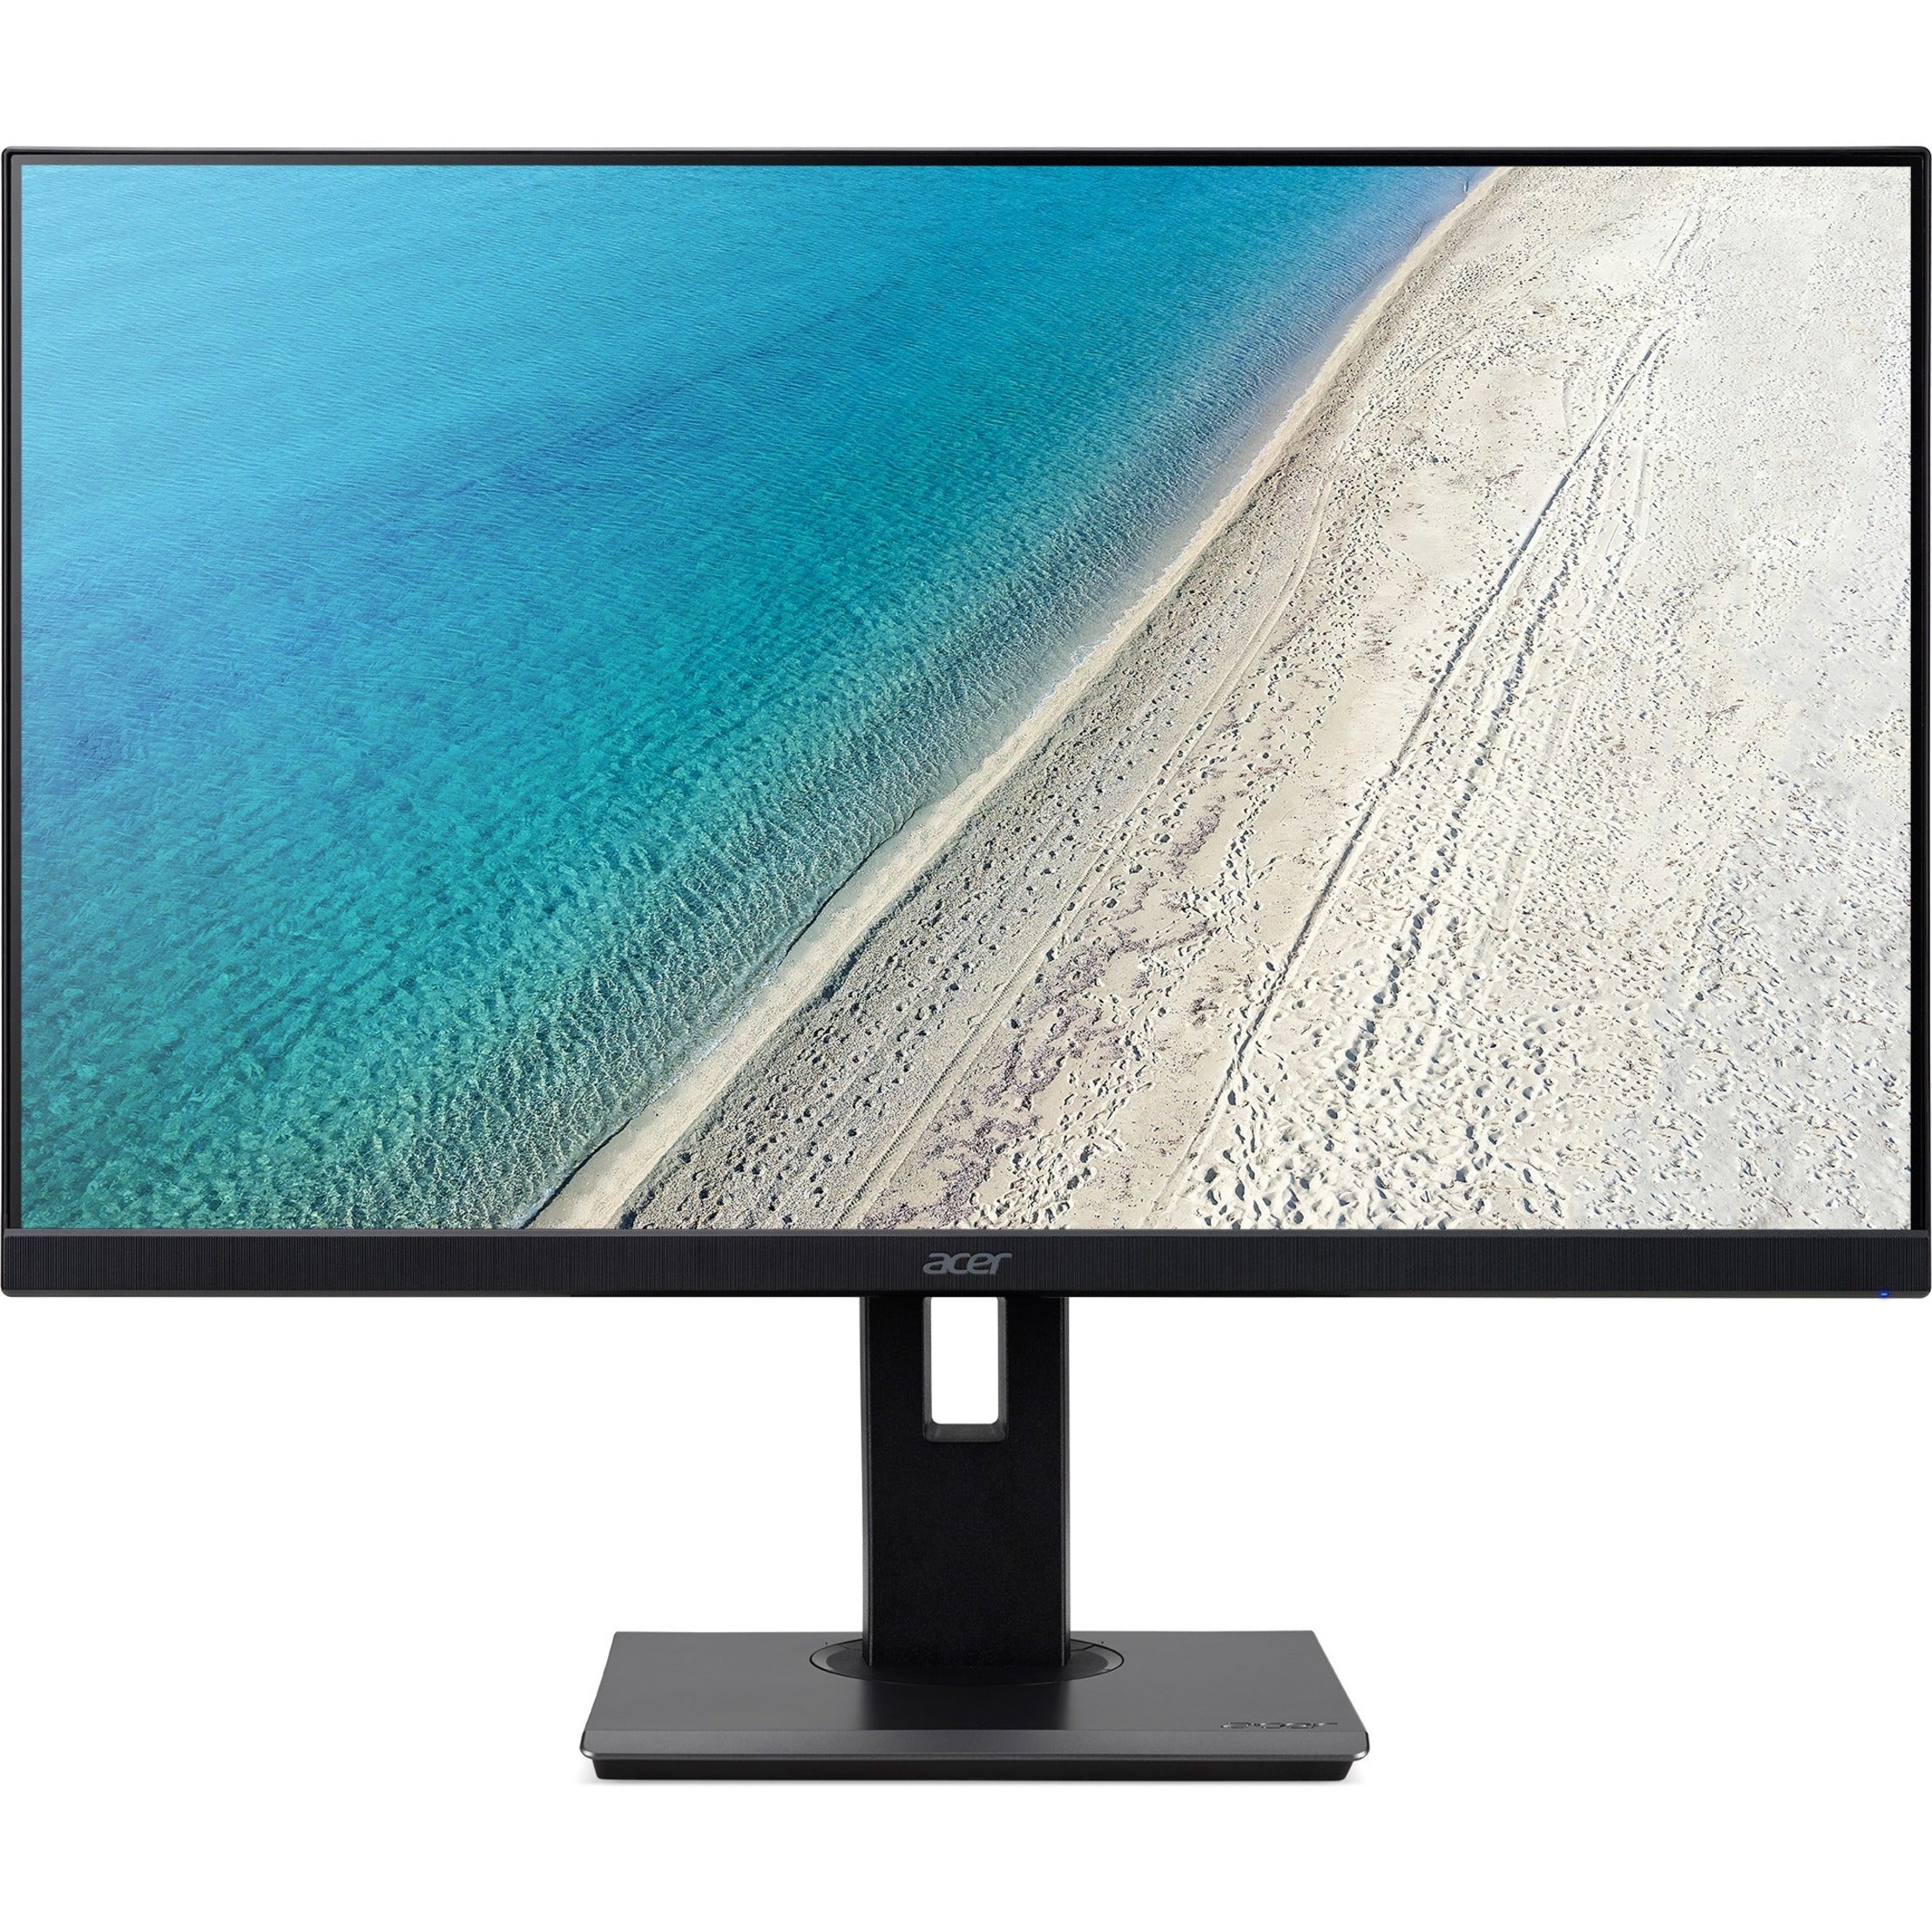 Acer UM.WB7AA.002 B227Q Widescreen LCD Monitor, 21.5, Full HD, Wall Mountable